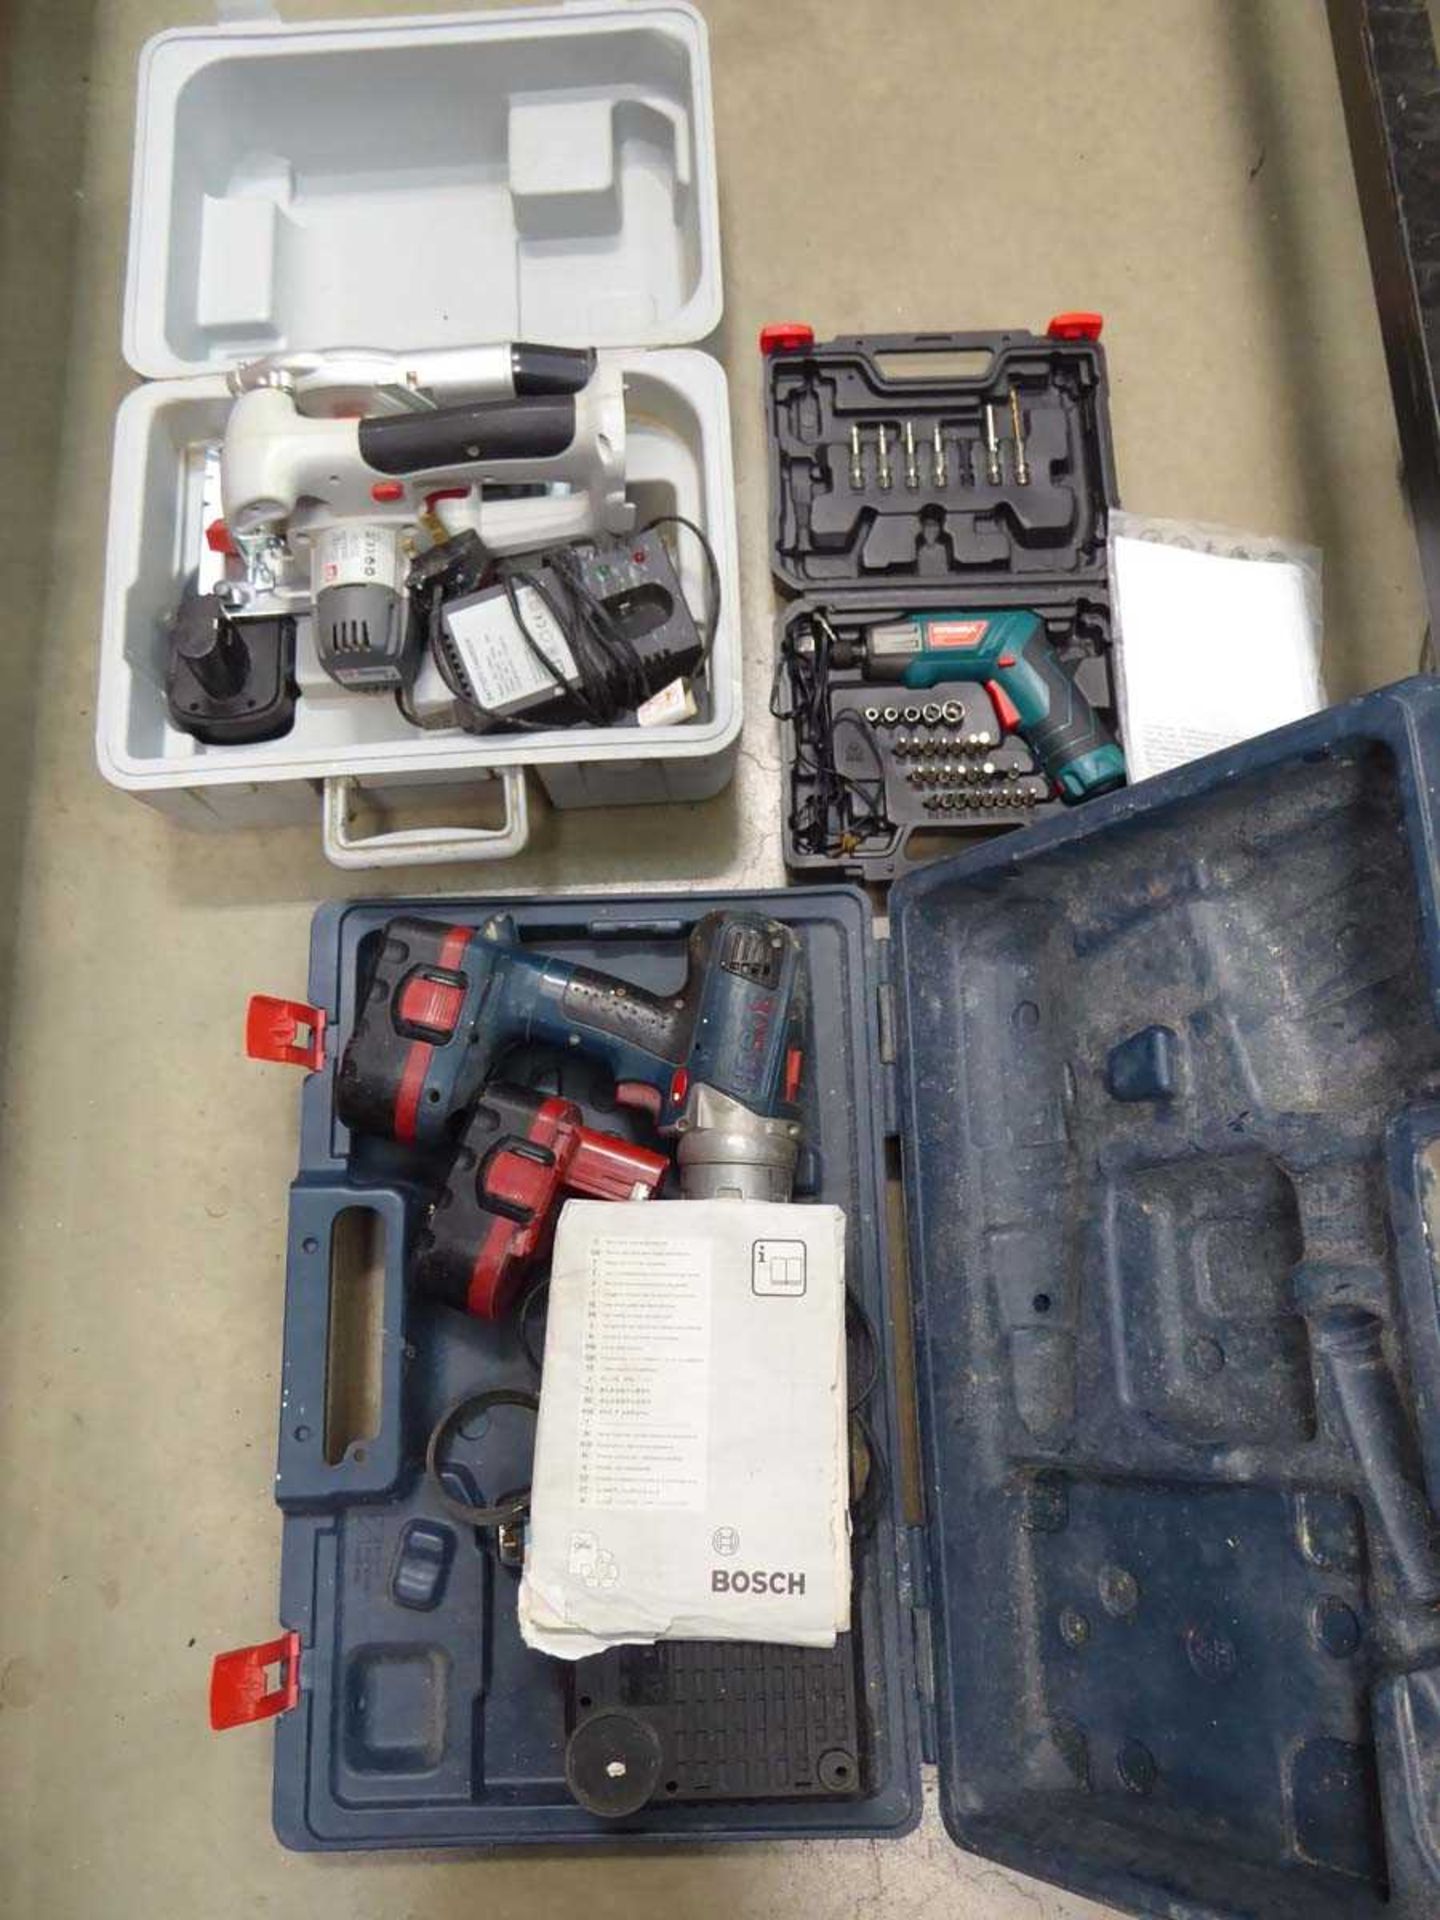 Circular saw, small mini screwdriver and a Bosch battery drill